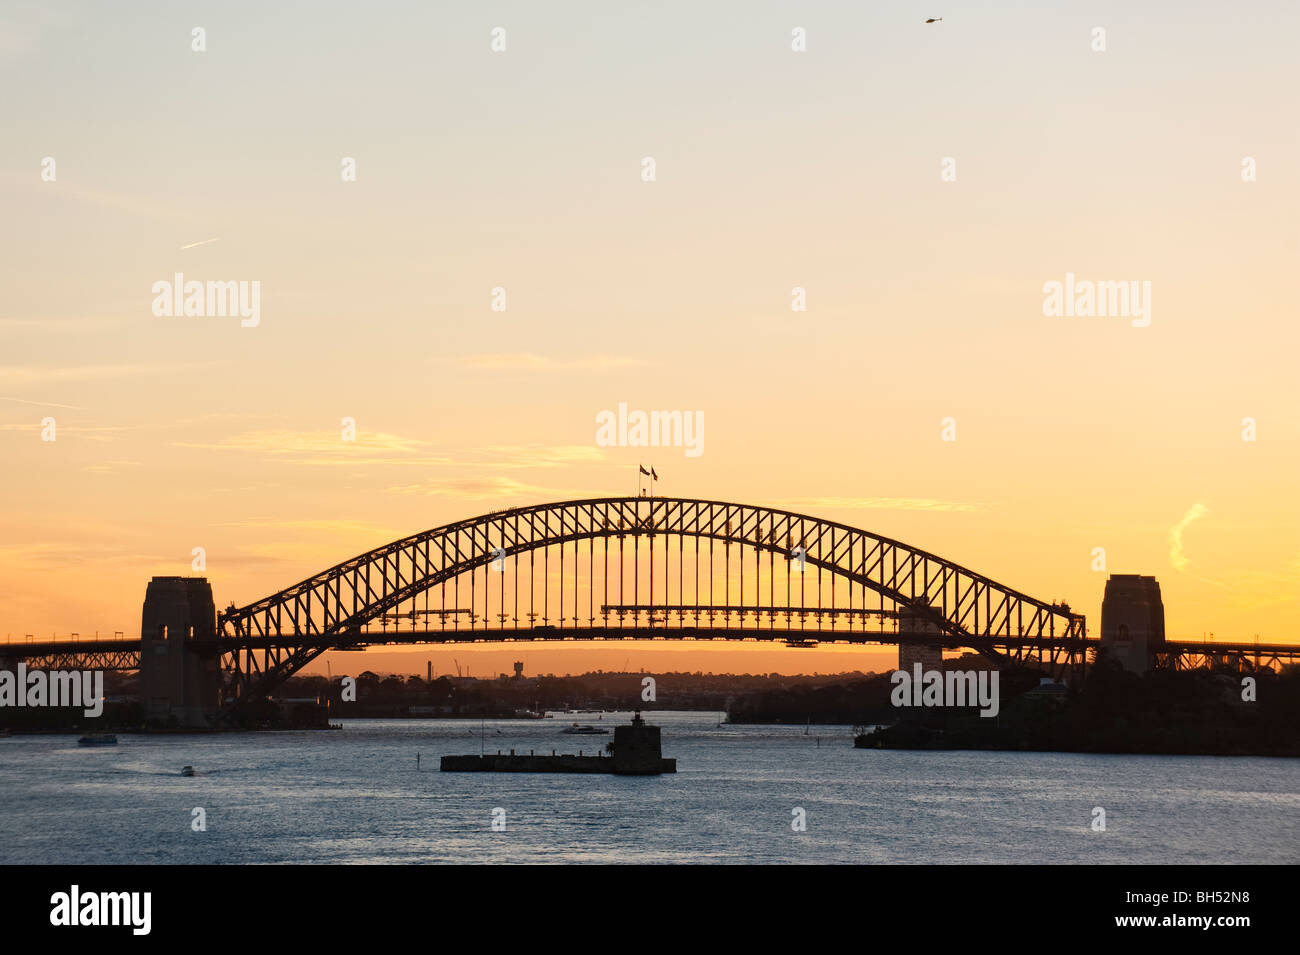 Stunning view of Sydney Harbour Bridge at Sunset, Australia Stock Photo